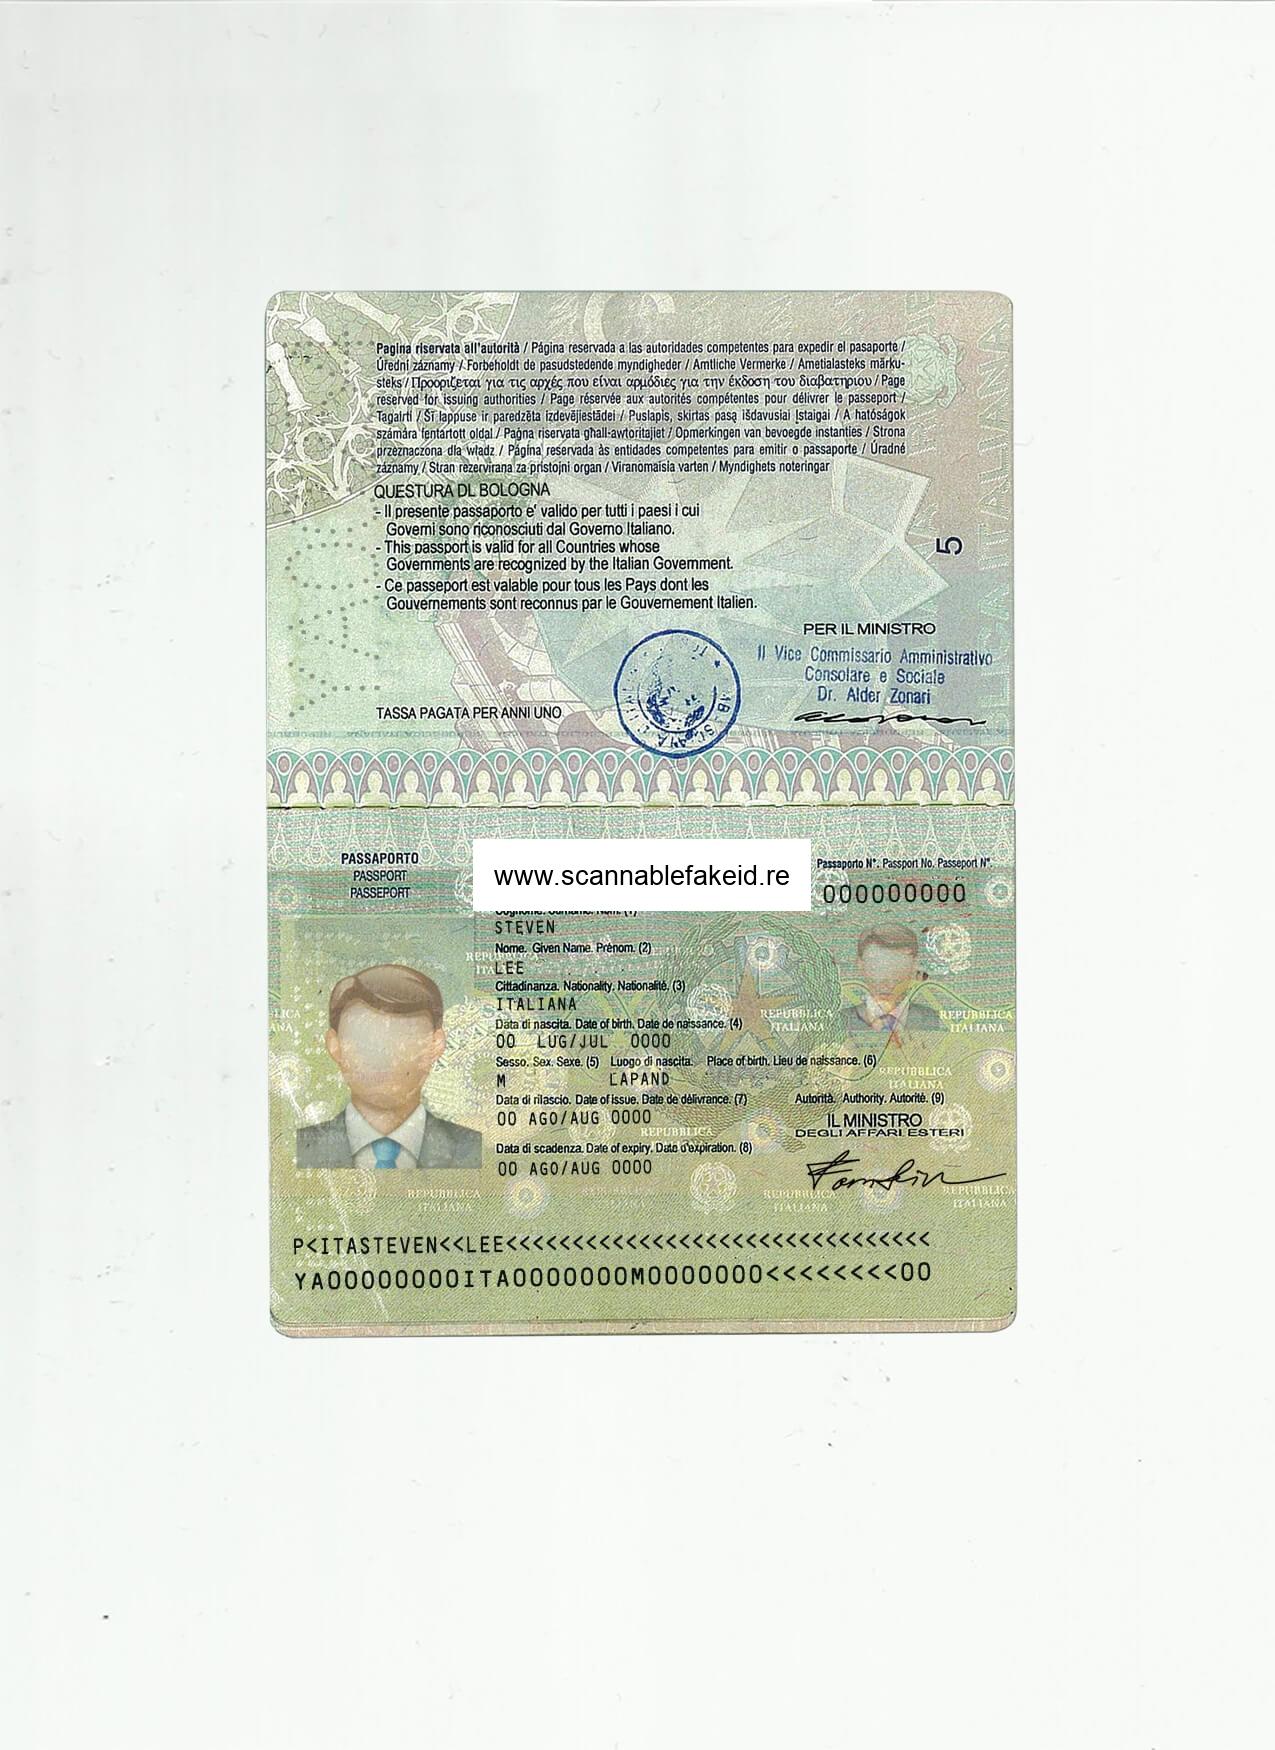 Italy Fake Passport - Buy Scannable Fake Id Online - Fake ID Website